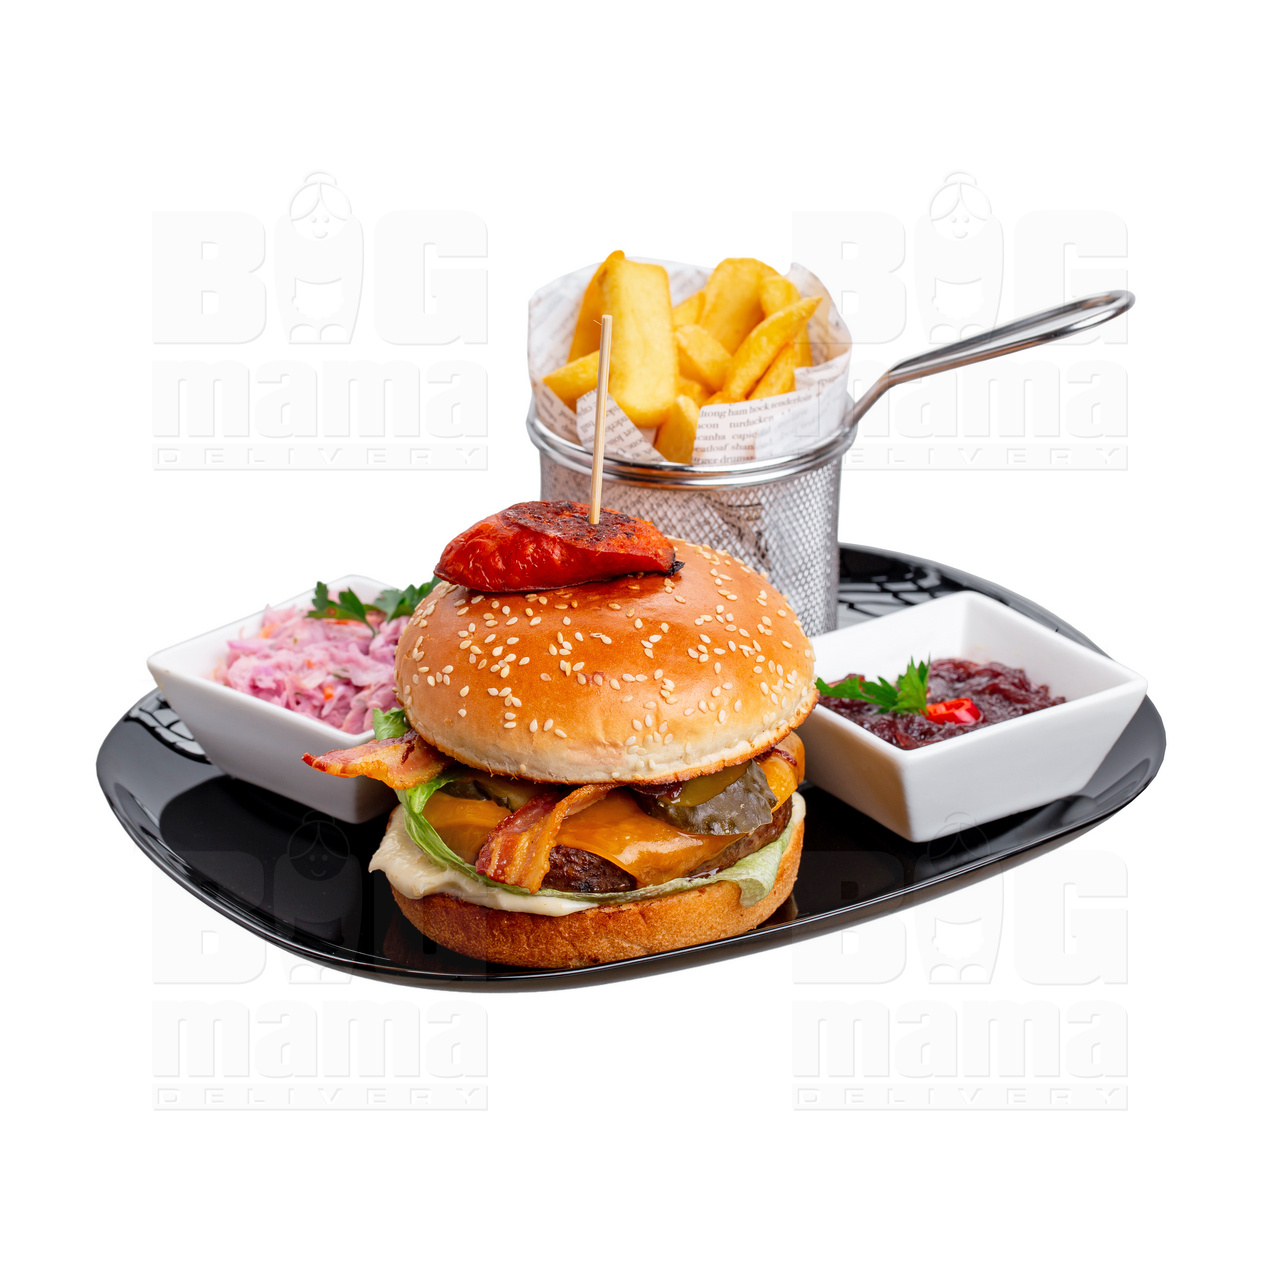 Product #256 image - Meniu burger unguresc